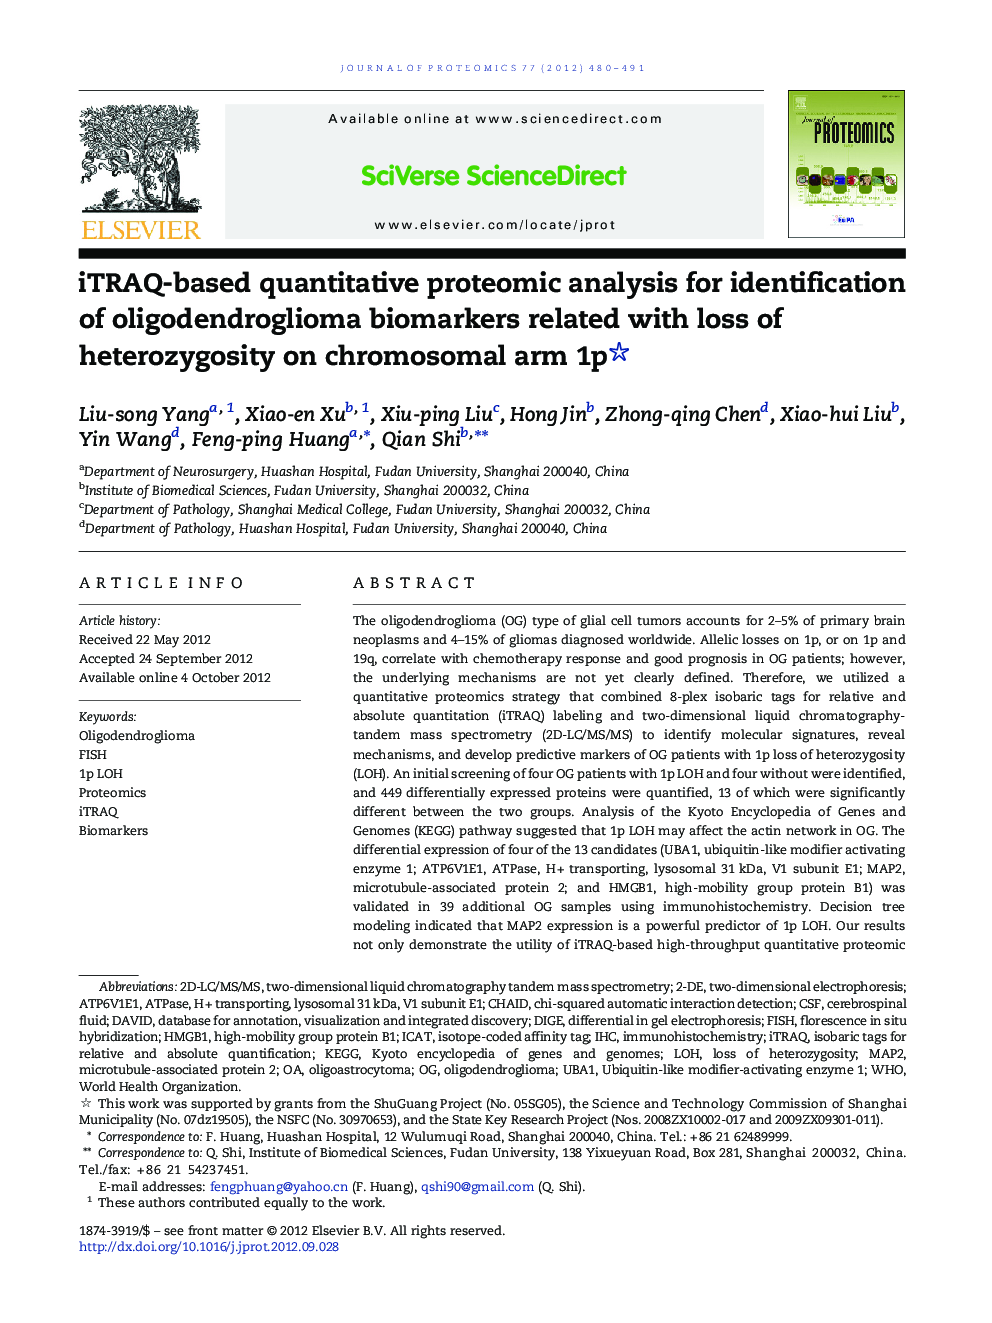 iTRAQ-based quantitative proteomic analysis for identification of oligodendroglioma biomarkers related with loss of heterozygosity on chromosomal arm 1p 